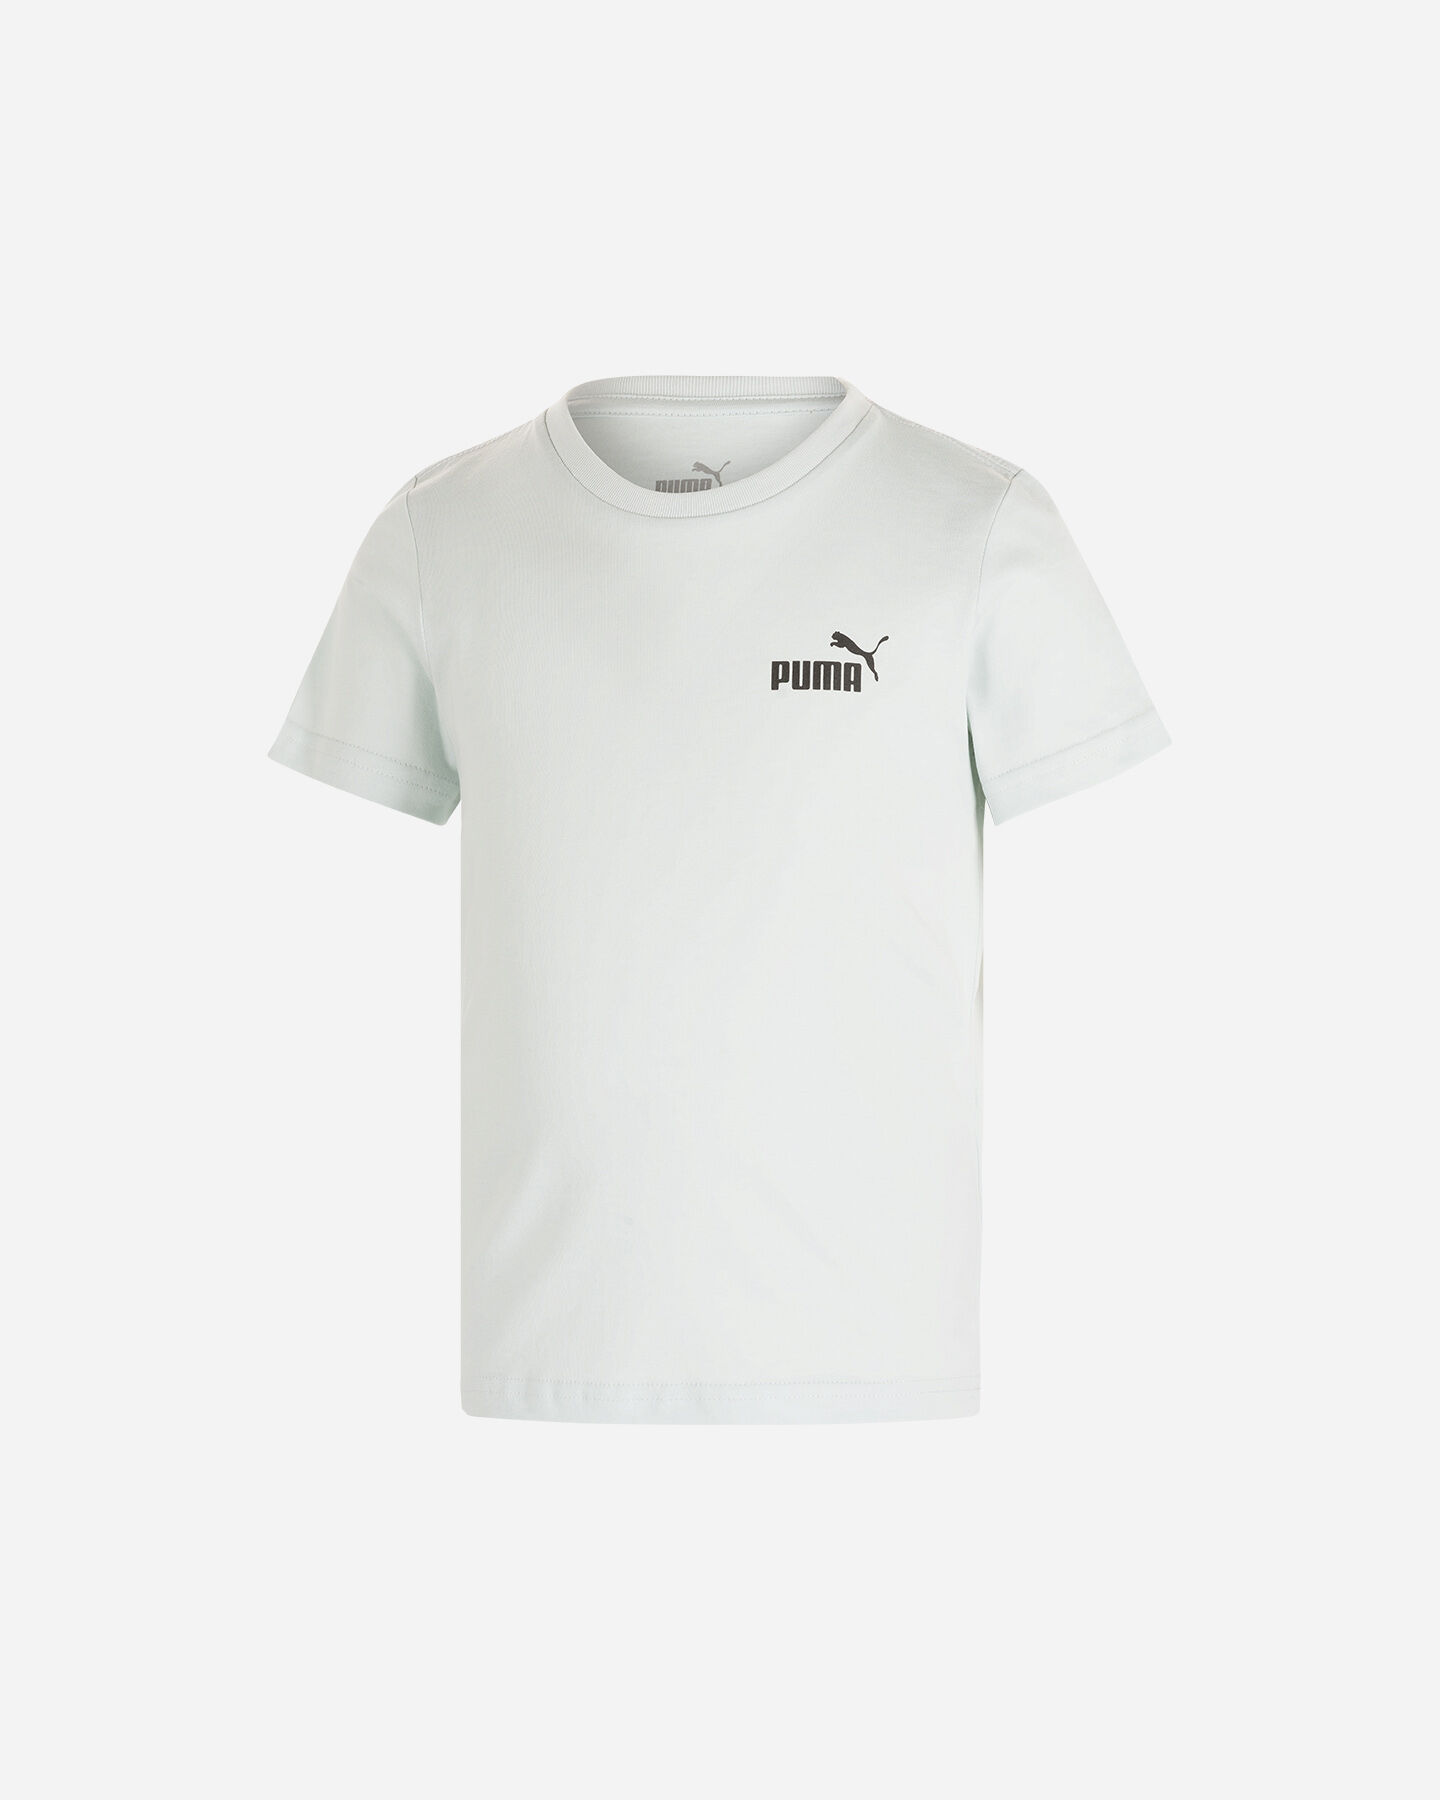  T-Shirt PUMA PALM JR S5503724|01|128 scatto 0